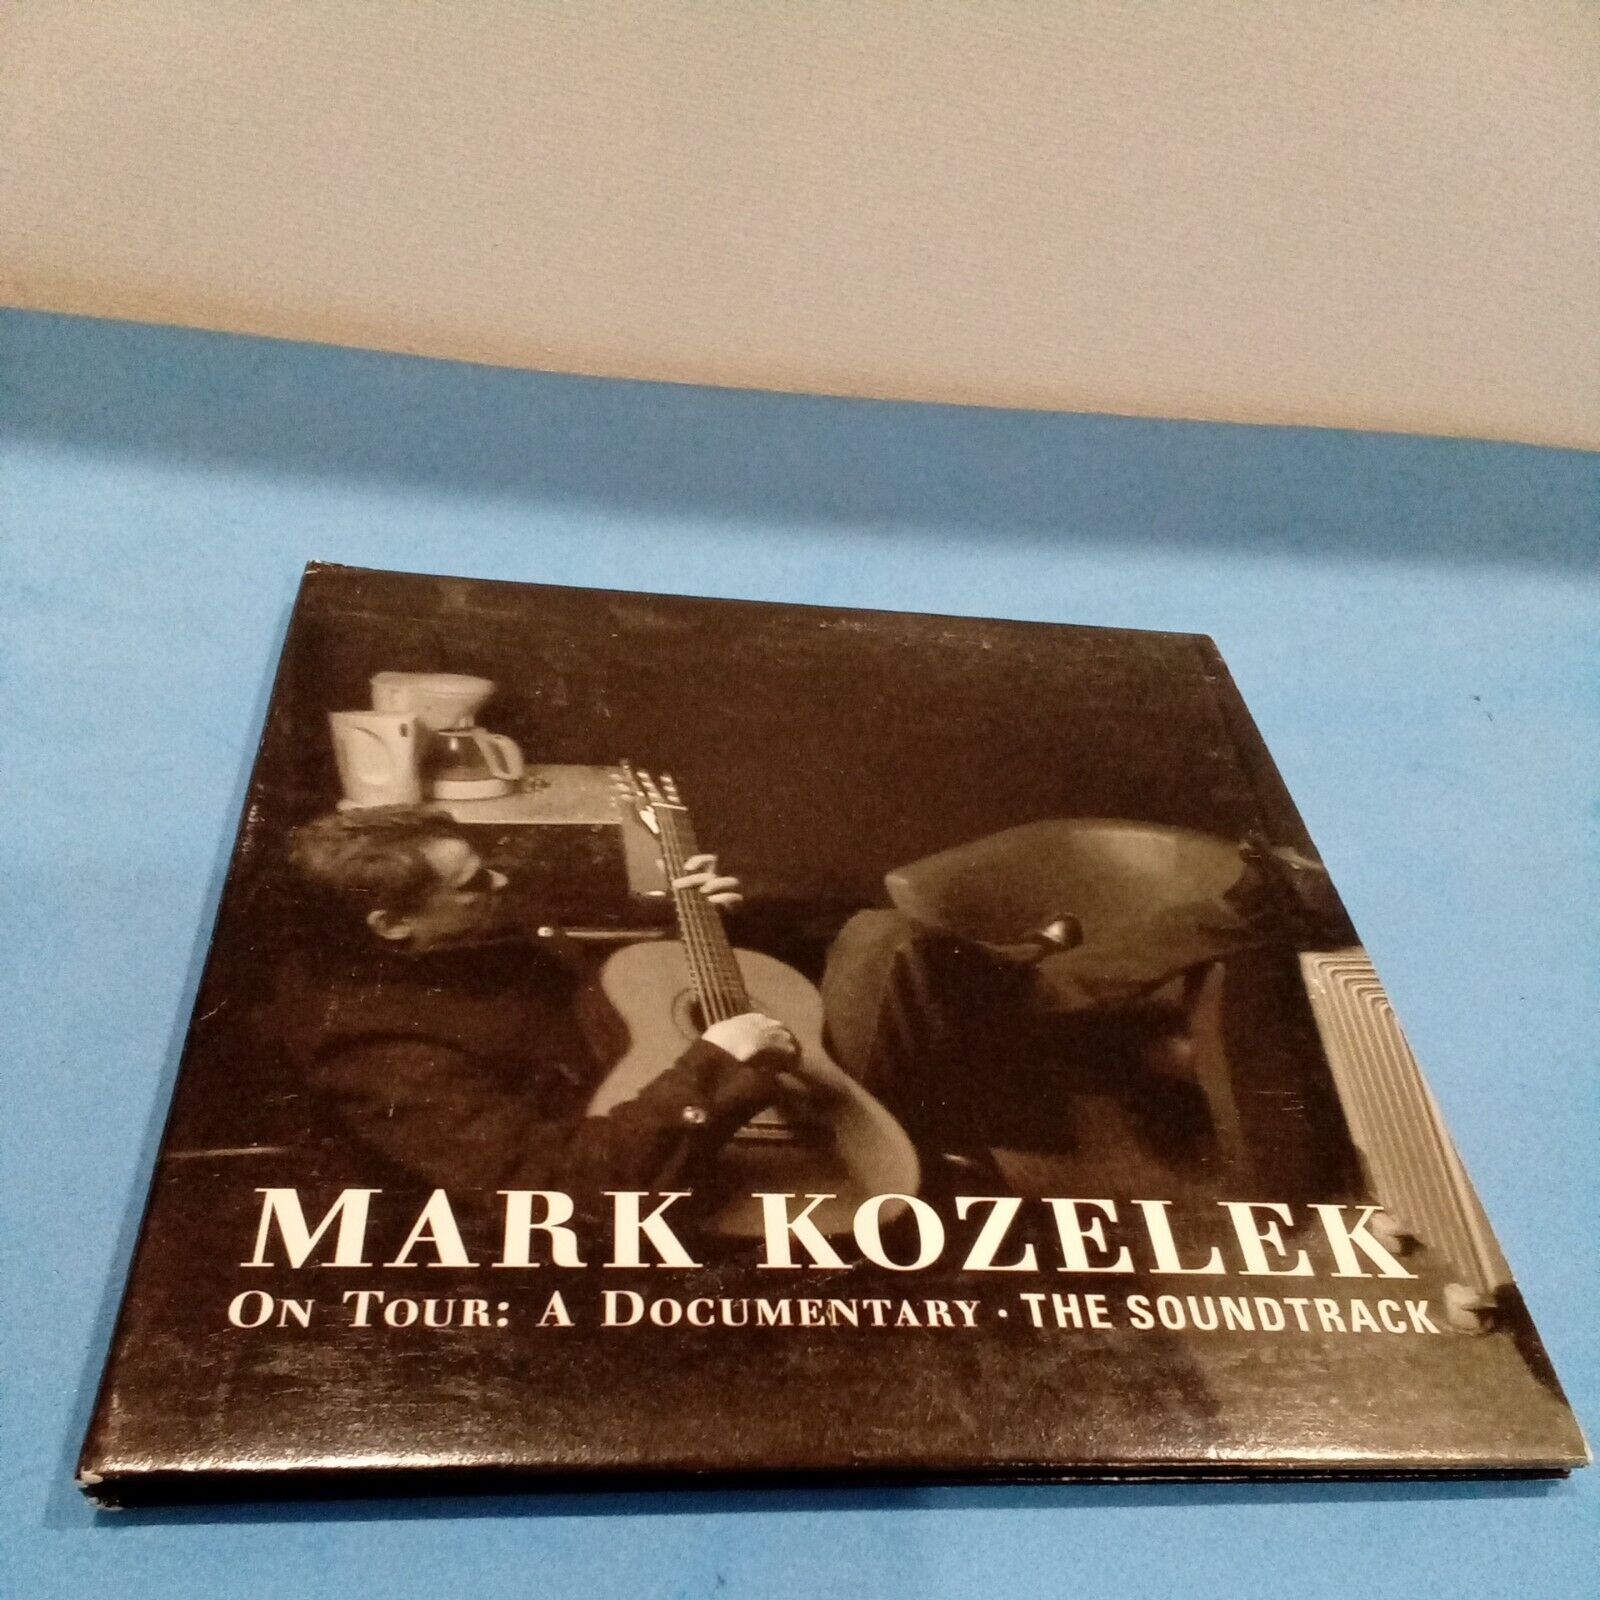 Mark Kozelek on Tour: The Soundtrack by Kozelek, Mark (CD, 2012) CLEAN CDs